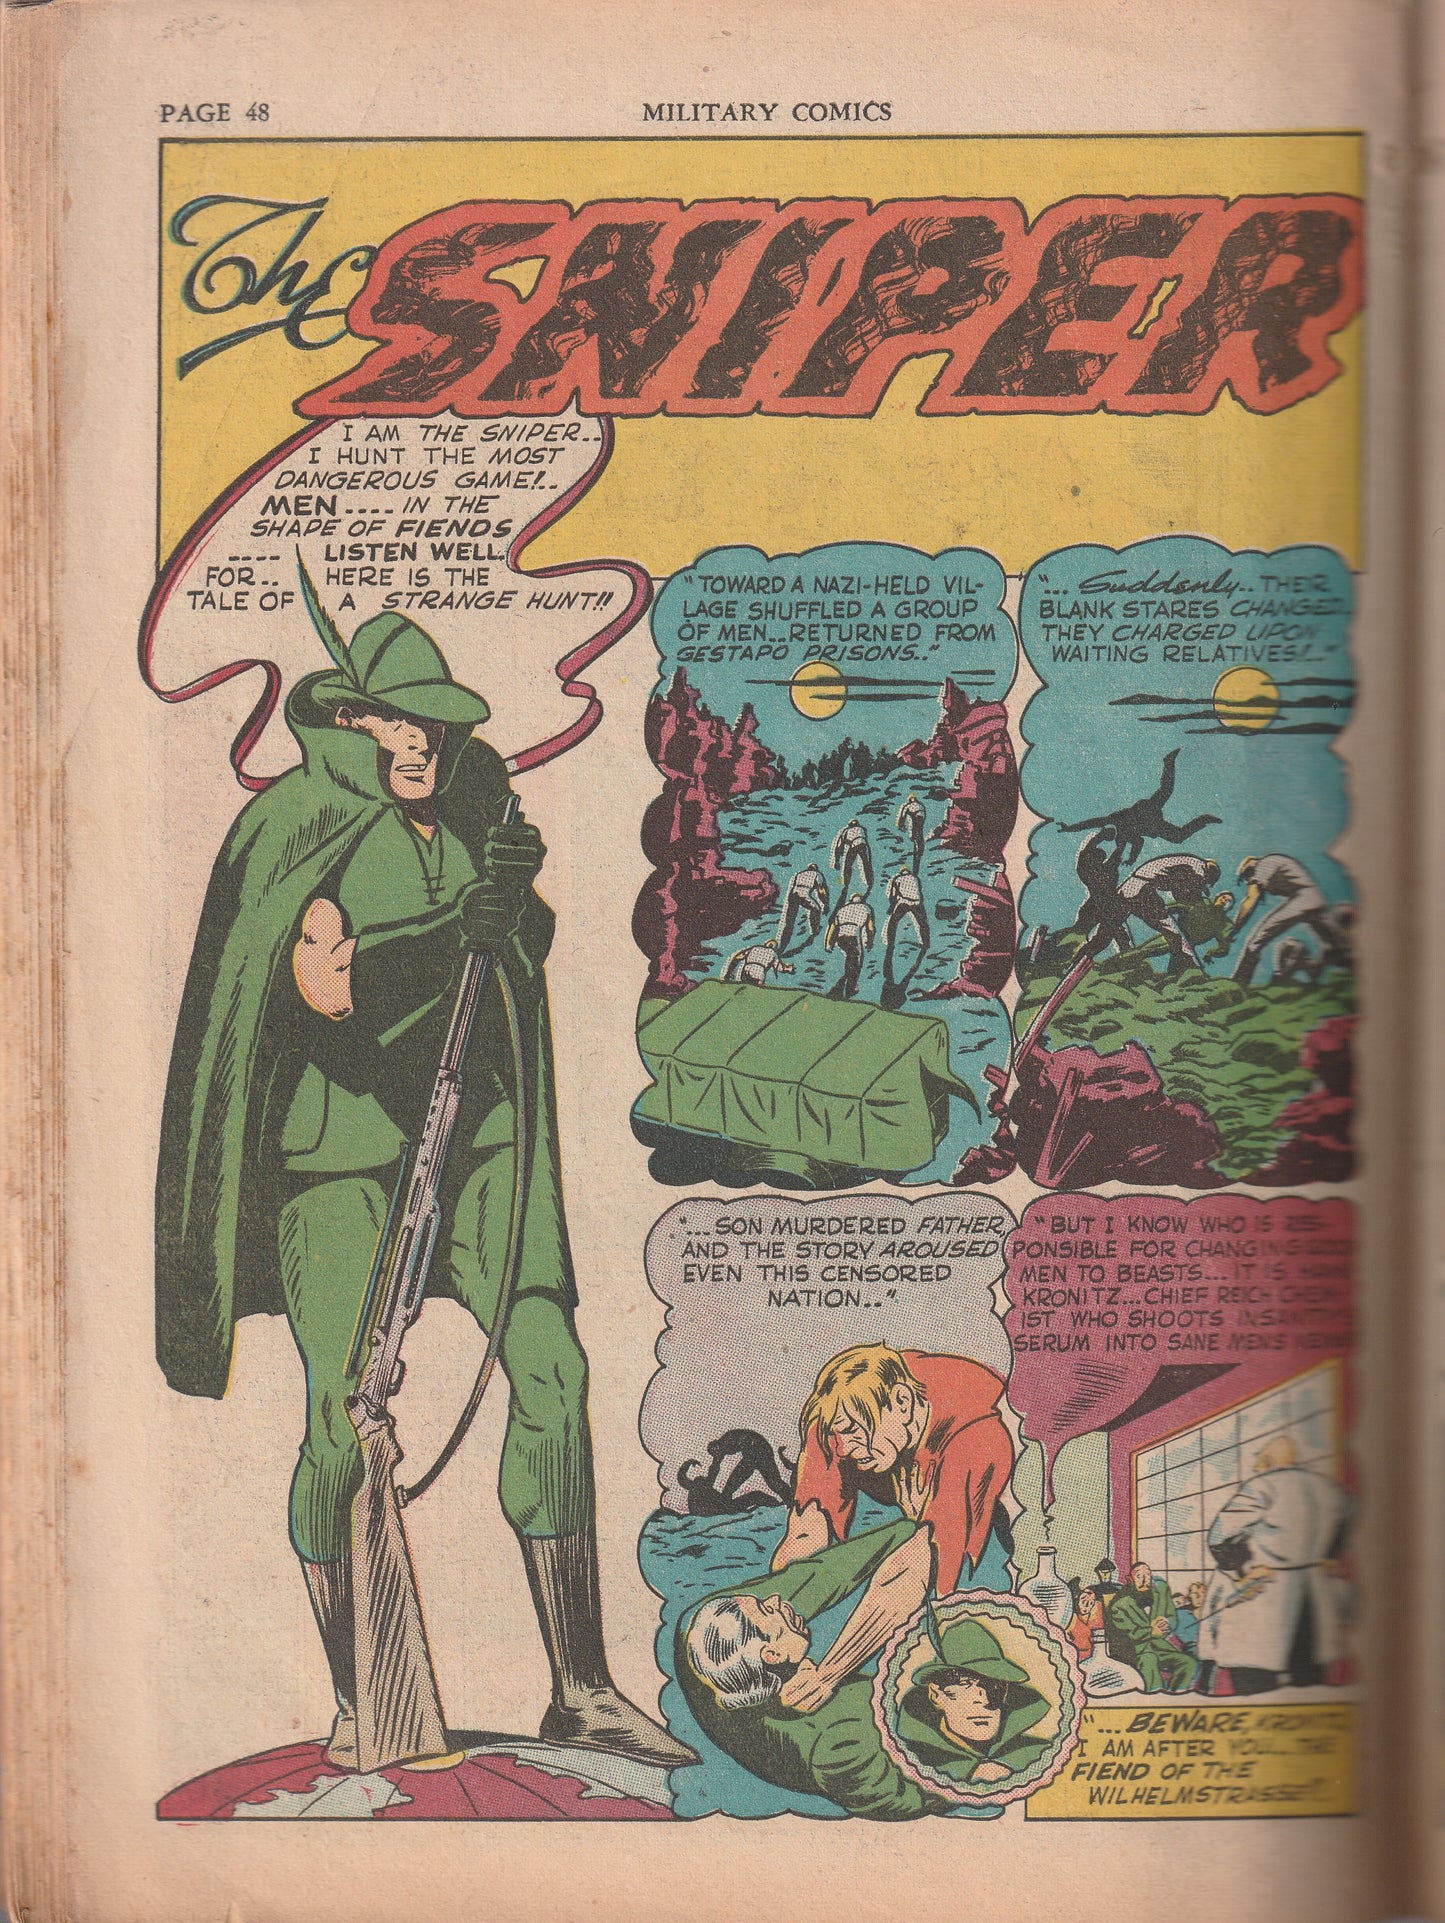 Military Comics #6 (1942)